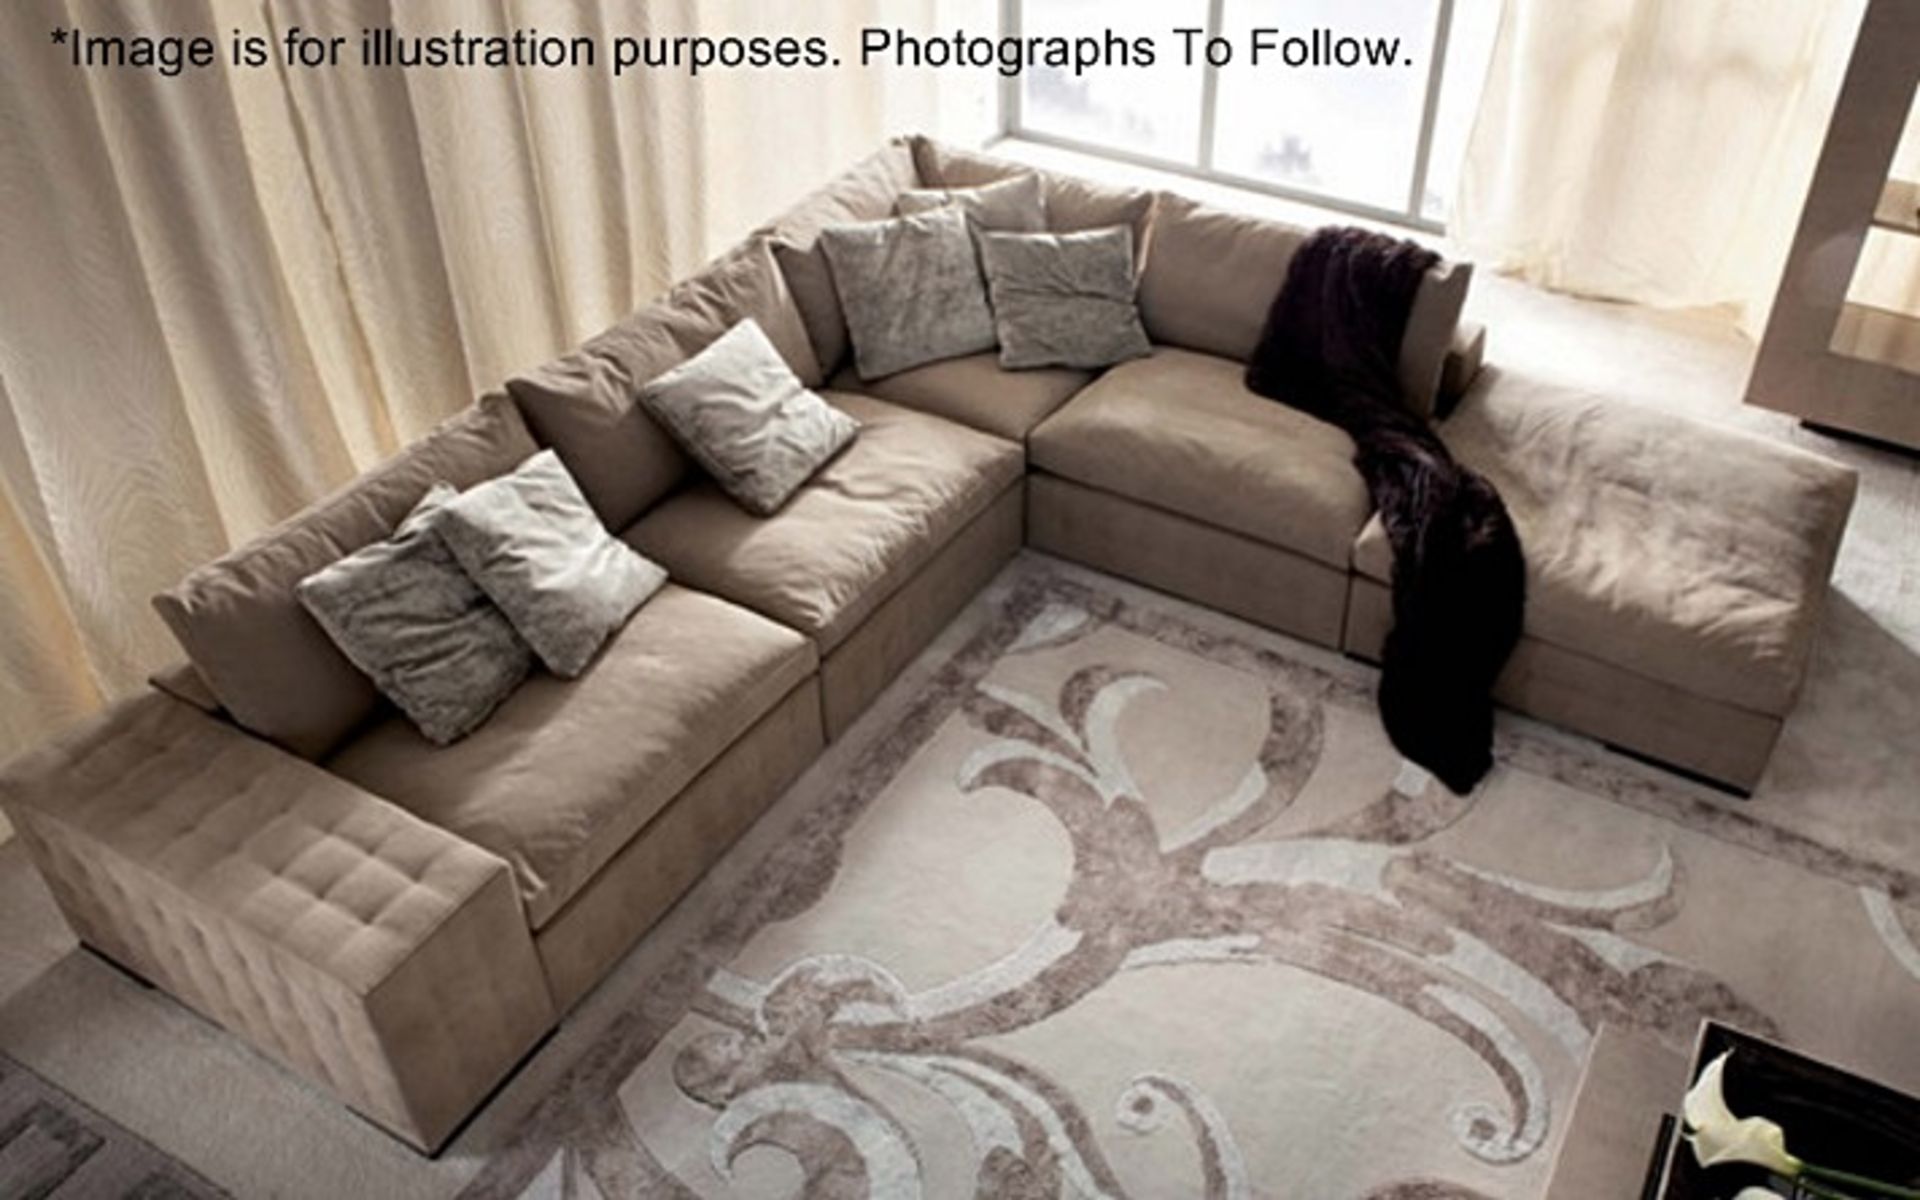 1 x GIORGIO Lifetime "Sayonara" Sectional Sofa Module (Sx132) - Upholstered In Camel-coloured Nubuck - Image 10 of 10